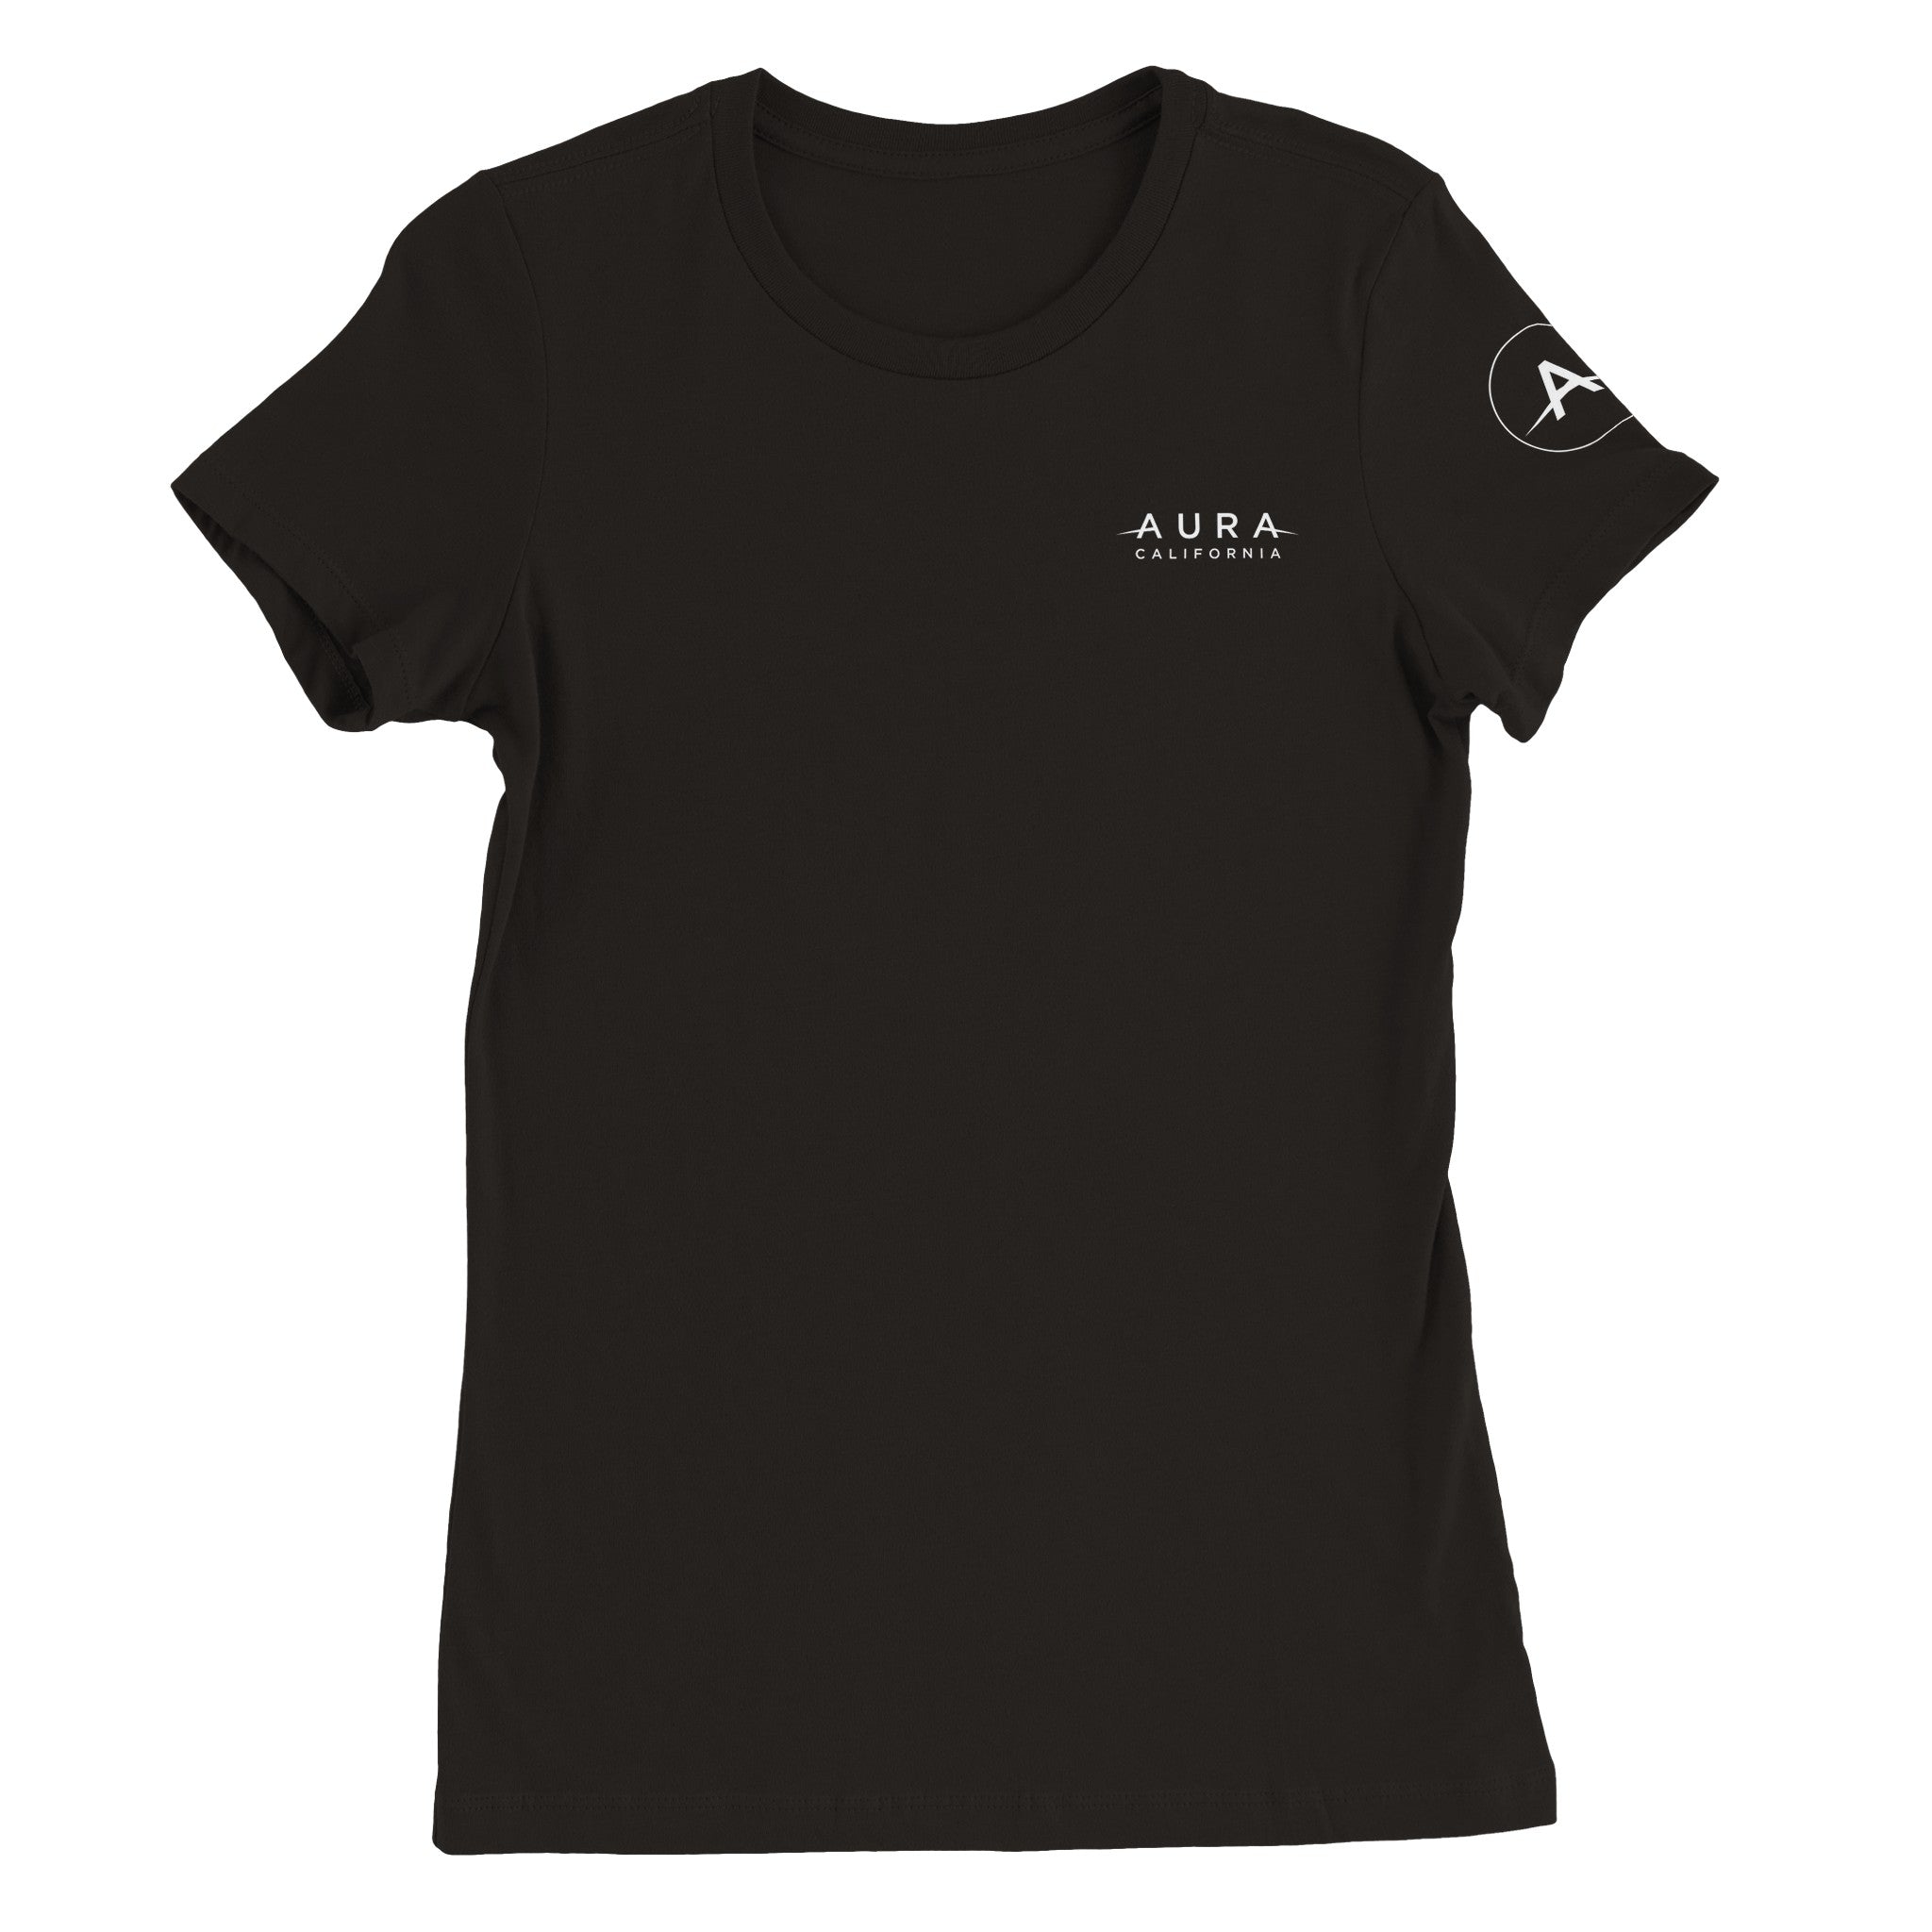 Aura California Women's Premium T-Shirt